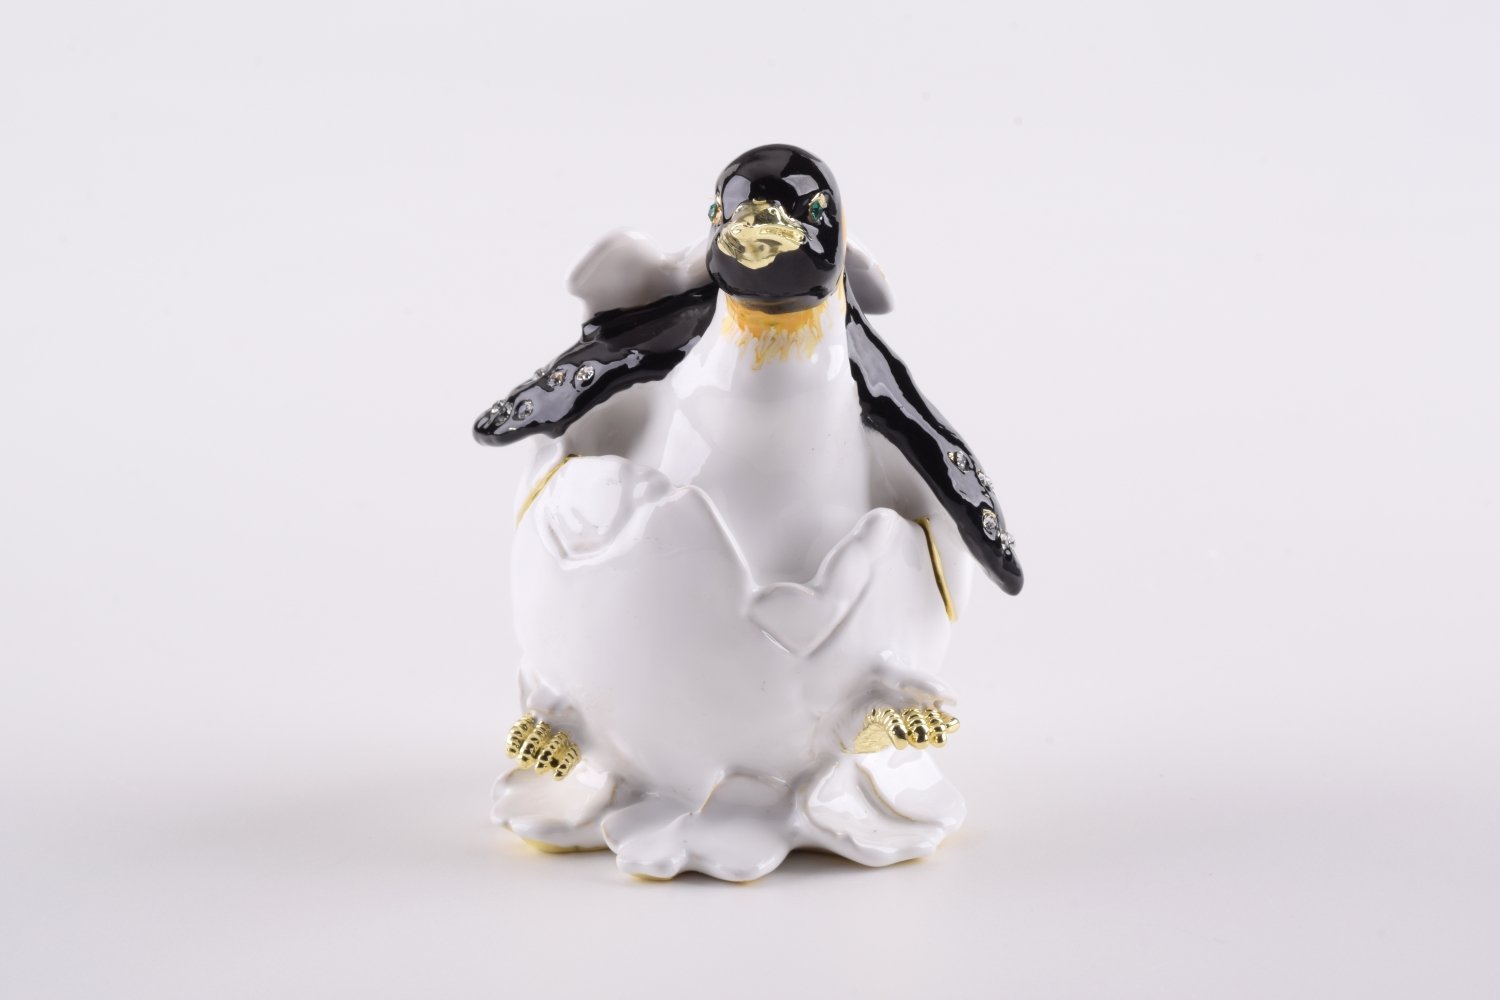 Keren Kopal Penguin Trinket Box  56.50